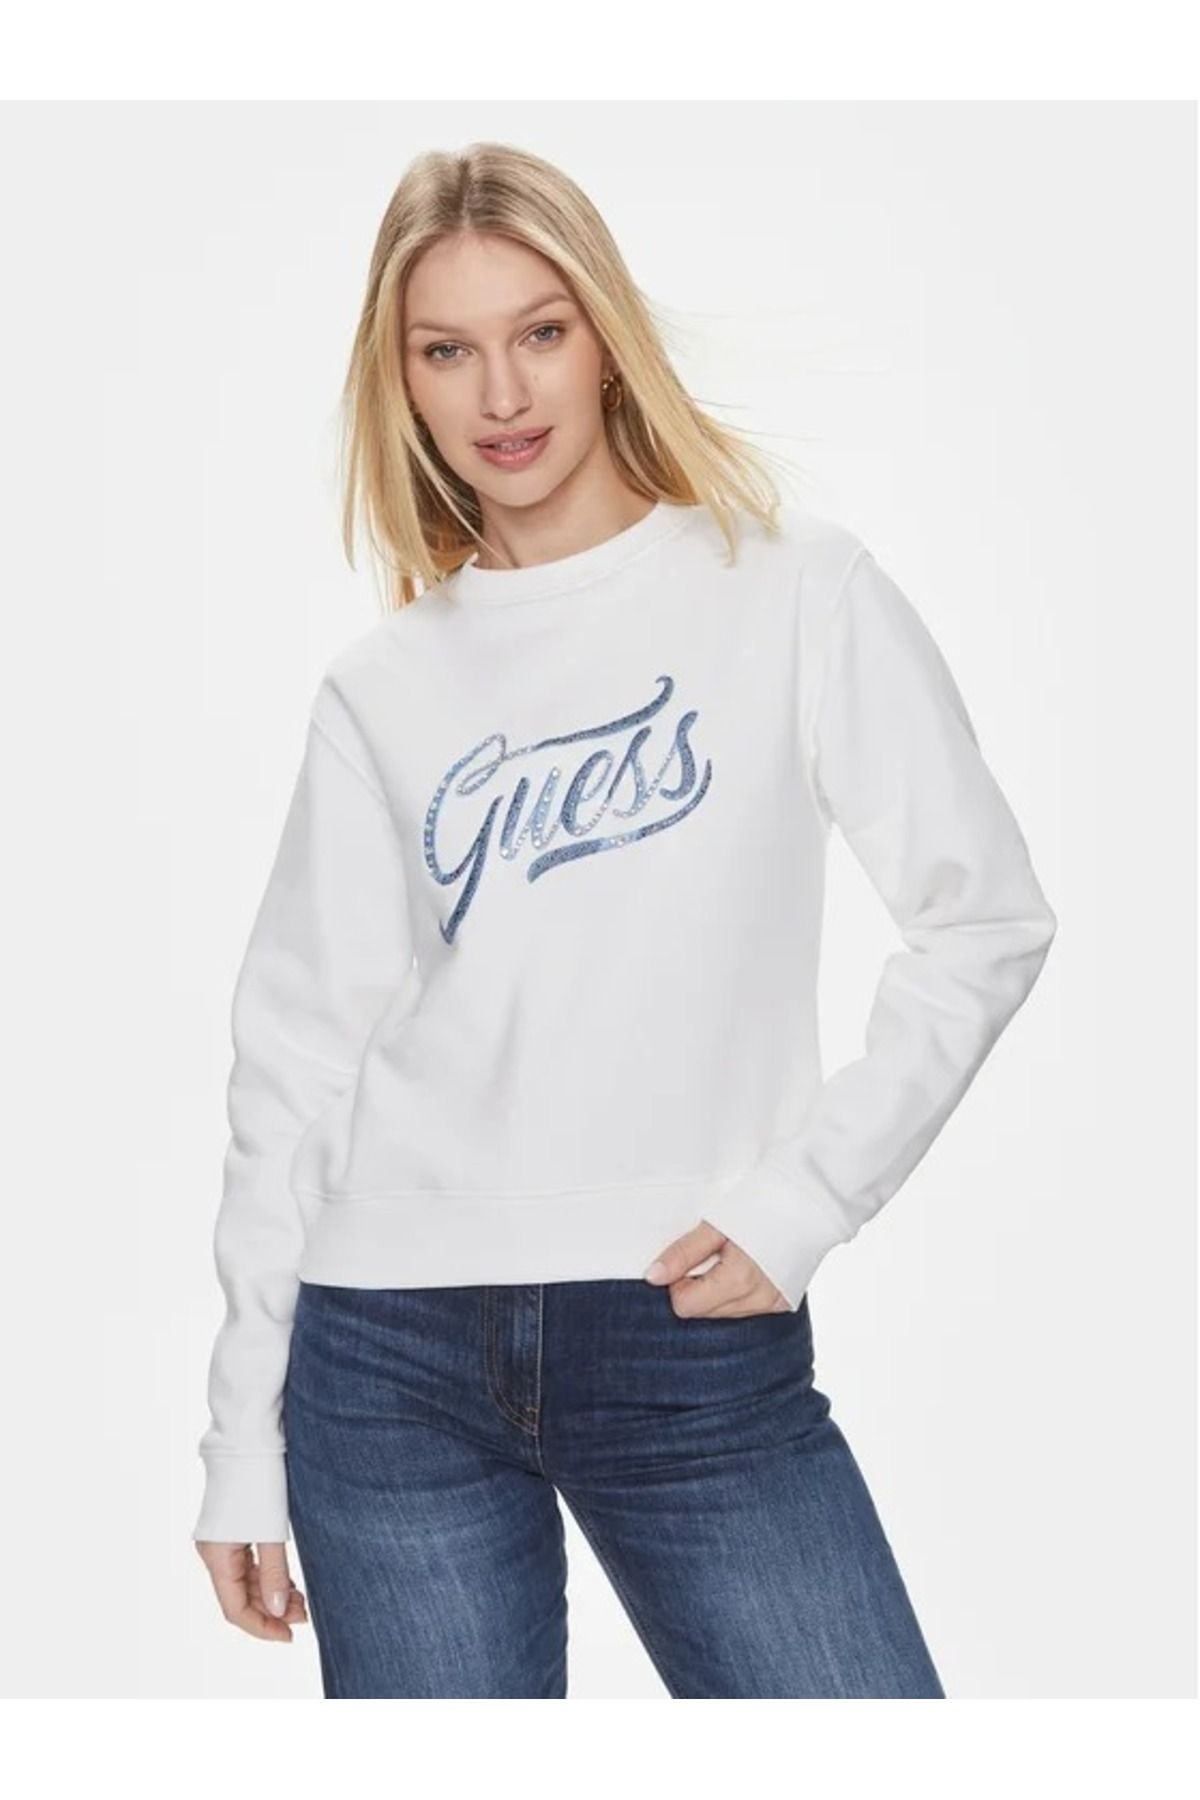 Guess Cn Stones Logo Kadın Sweatshirt